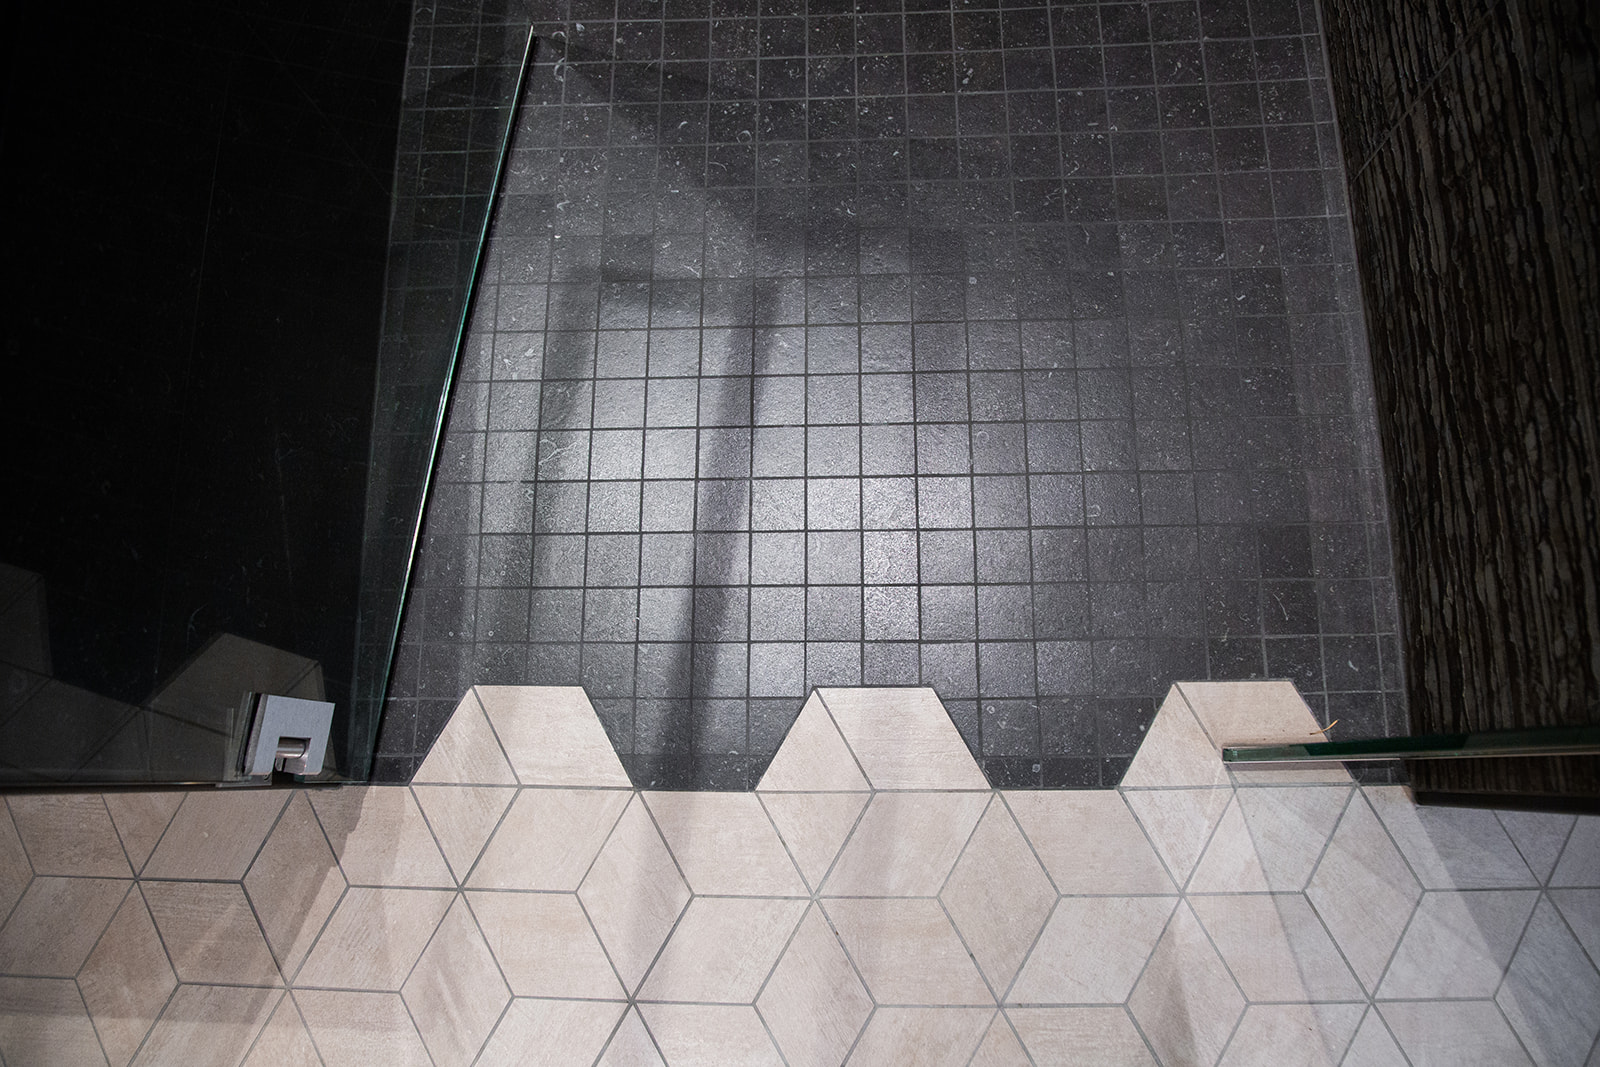 shower floor tile detail transition with multicolored porcelain tile